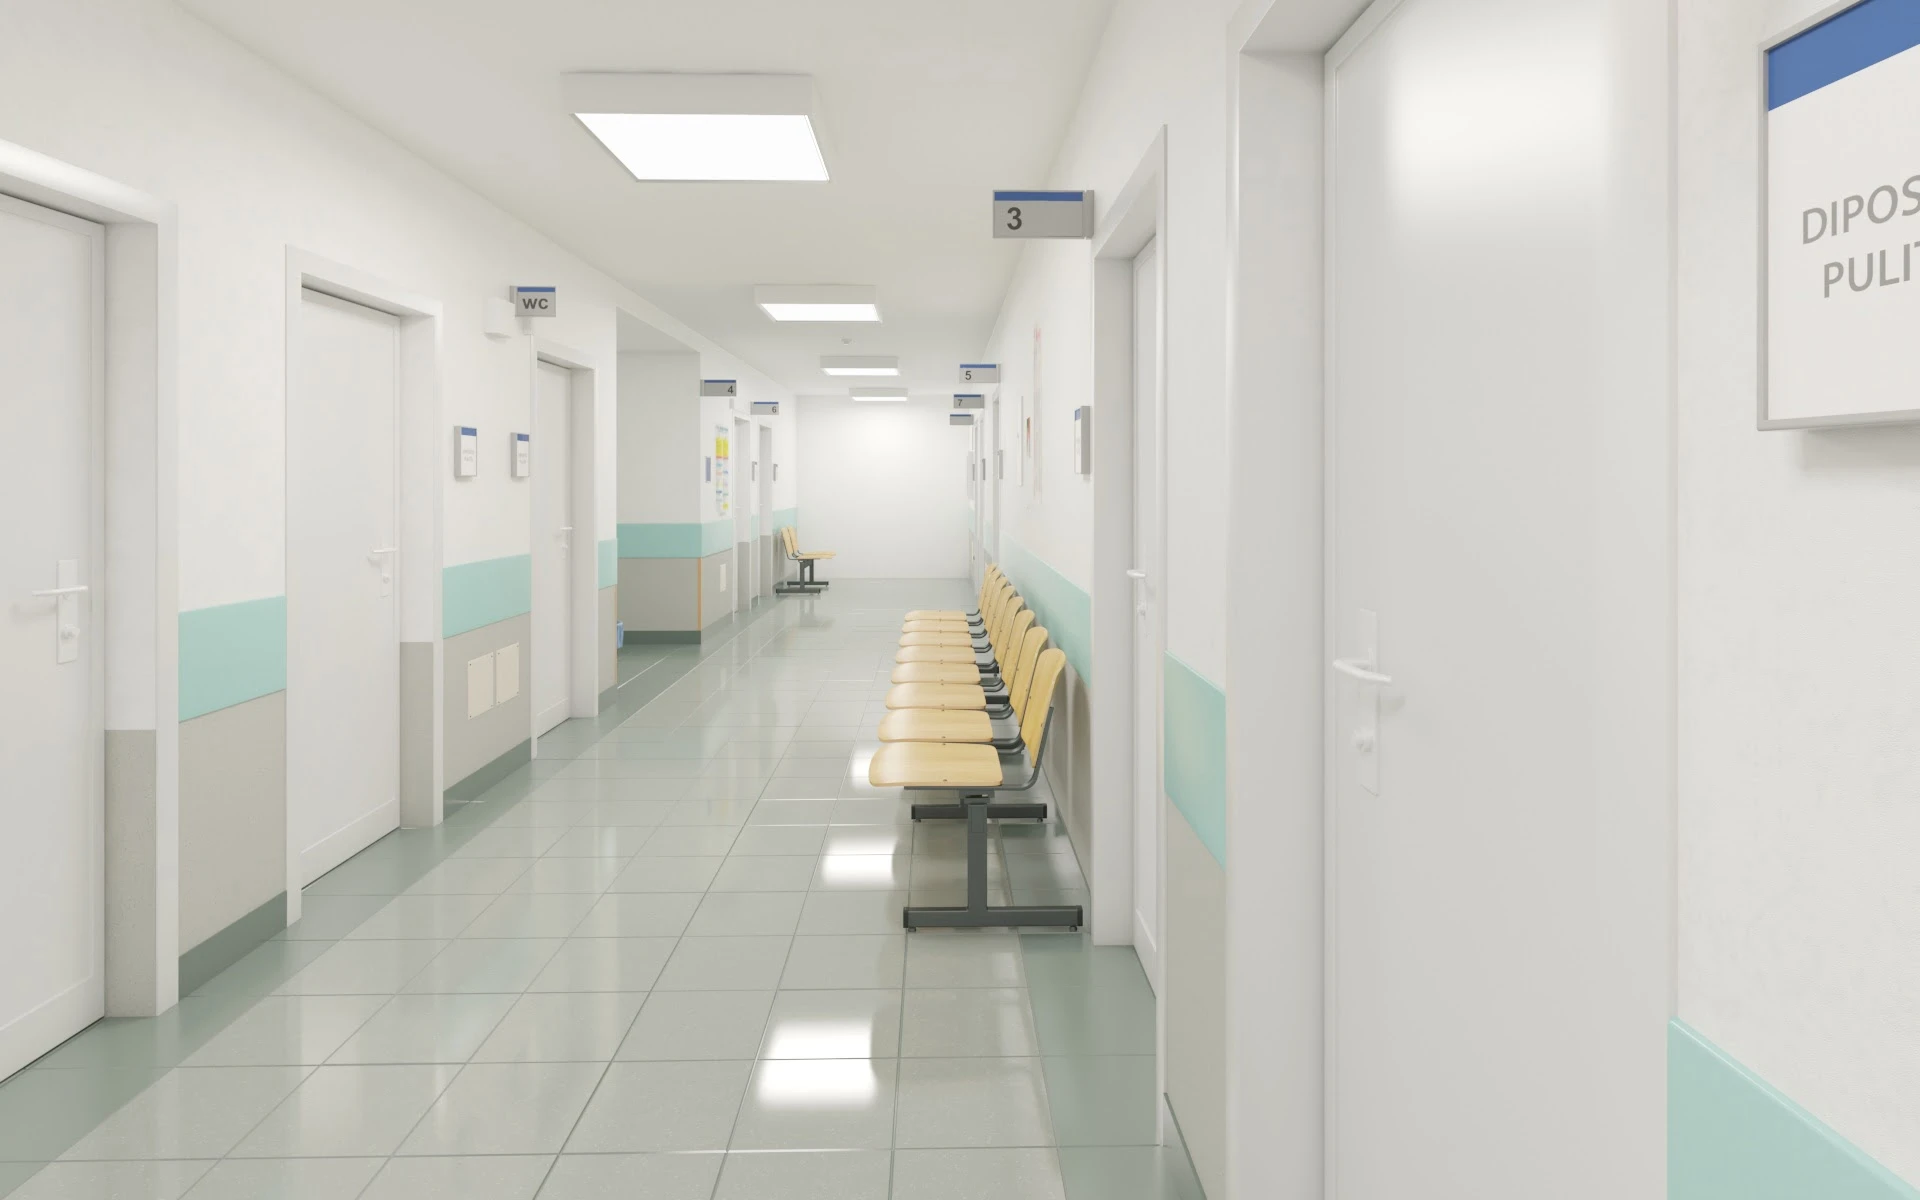 019 Hospital Hallway Corridor 3D Model_05